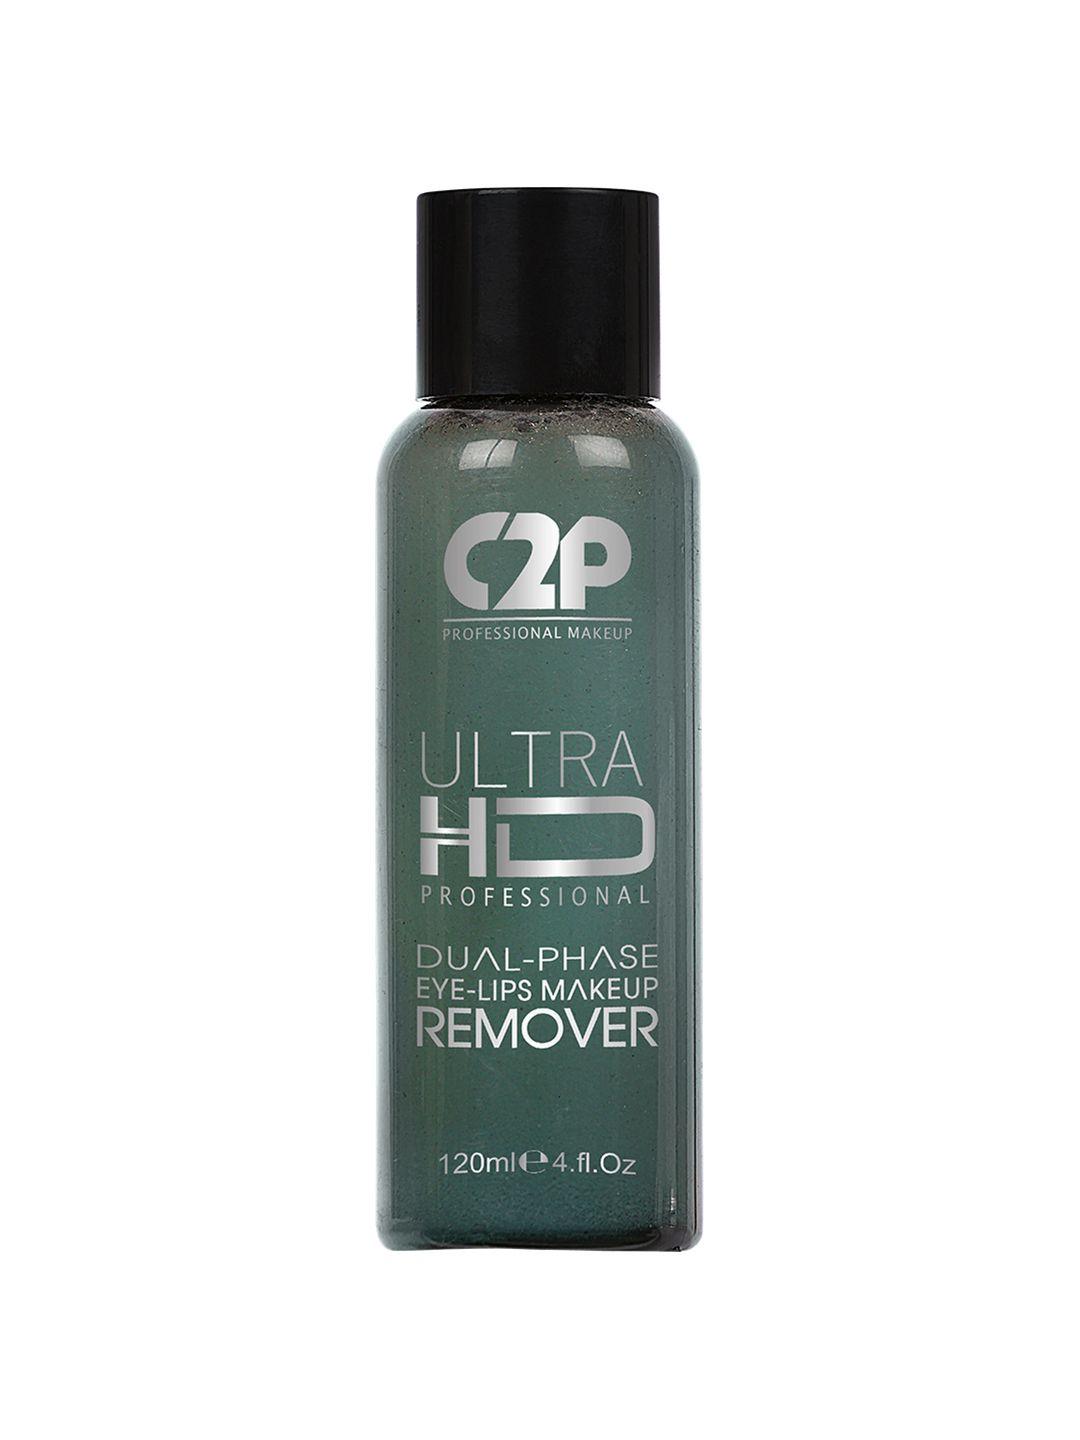 c2p professional makeup ultra hd dual phase eye & lip makeup remover 120ml